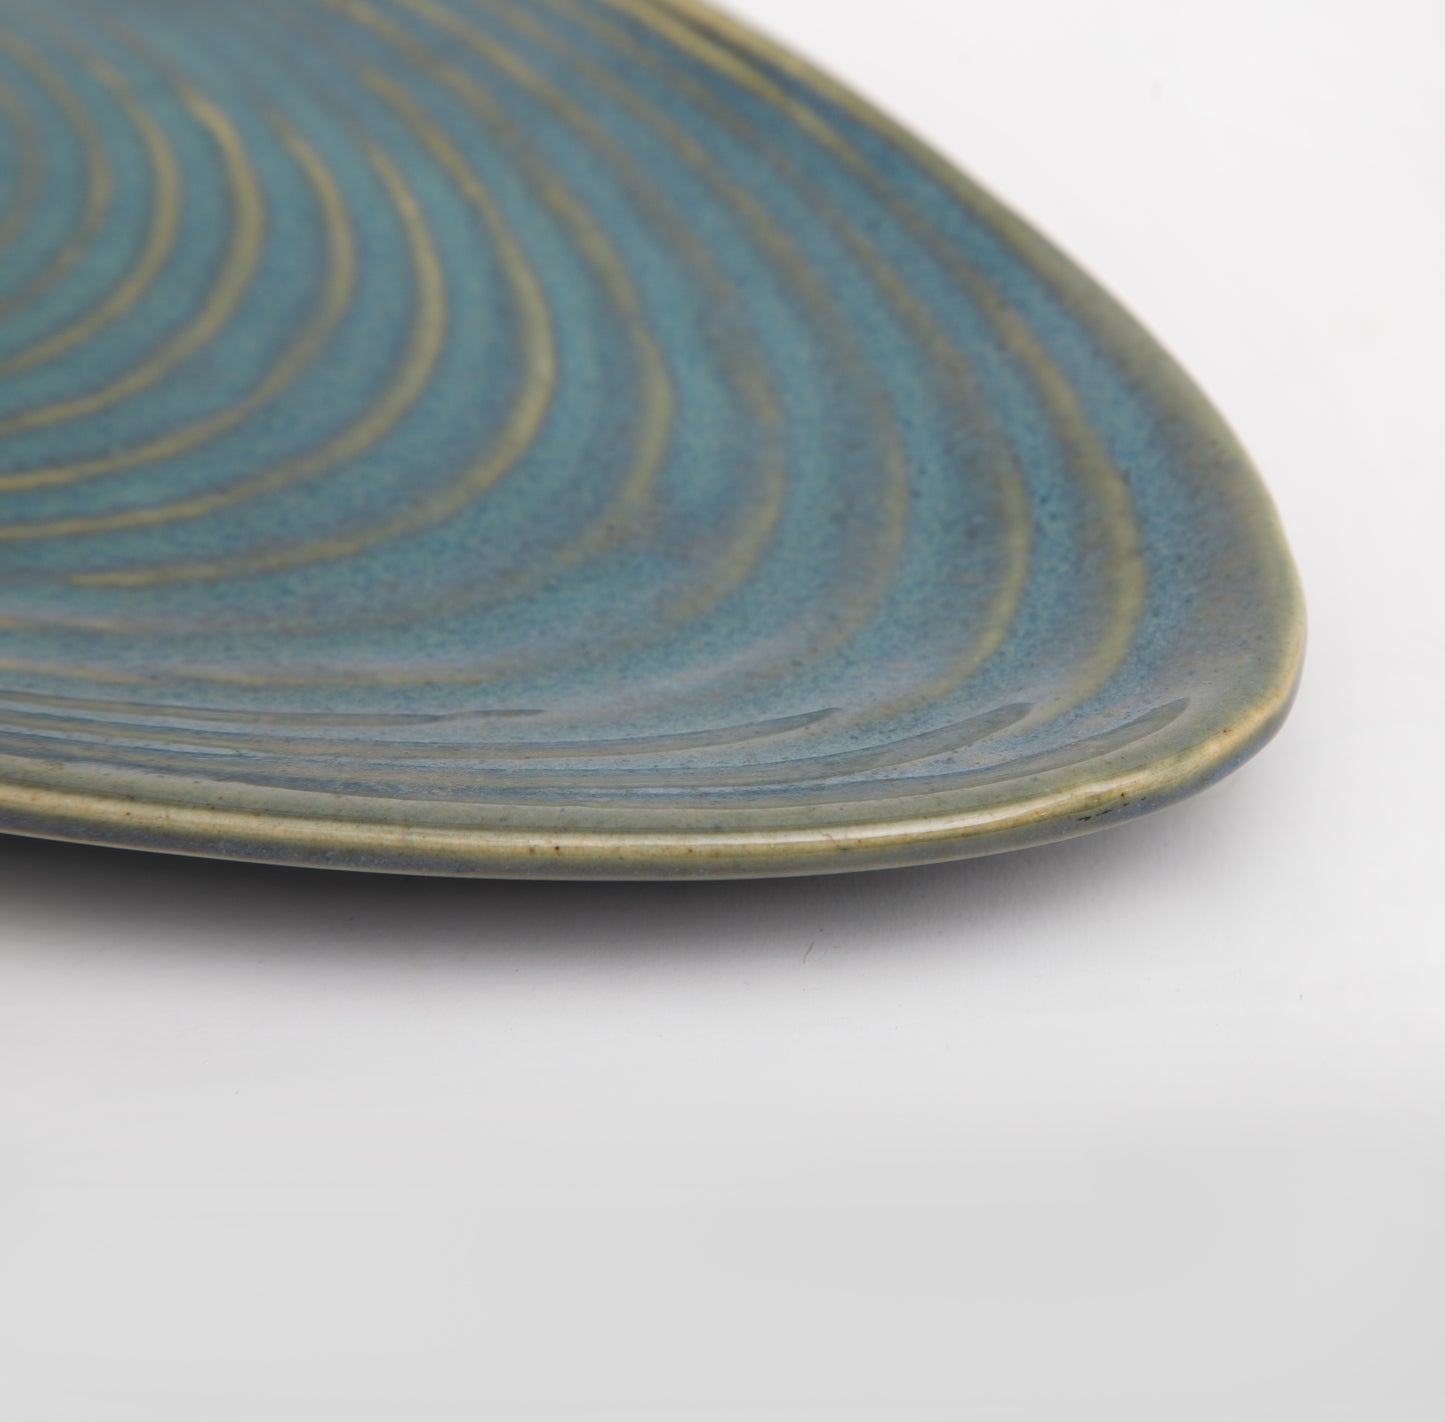 Almond Shaped Green Ceramic Serving Platter